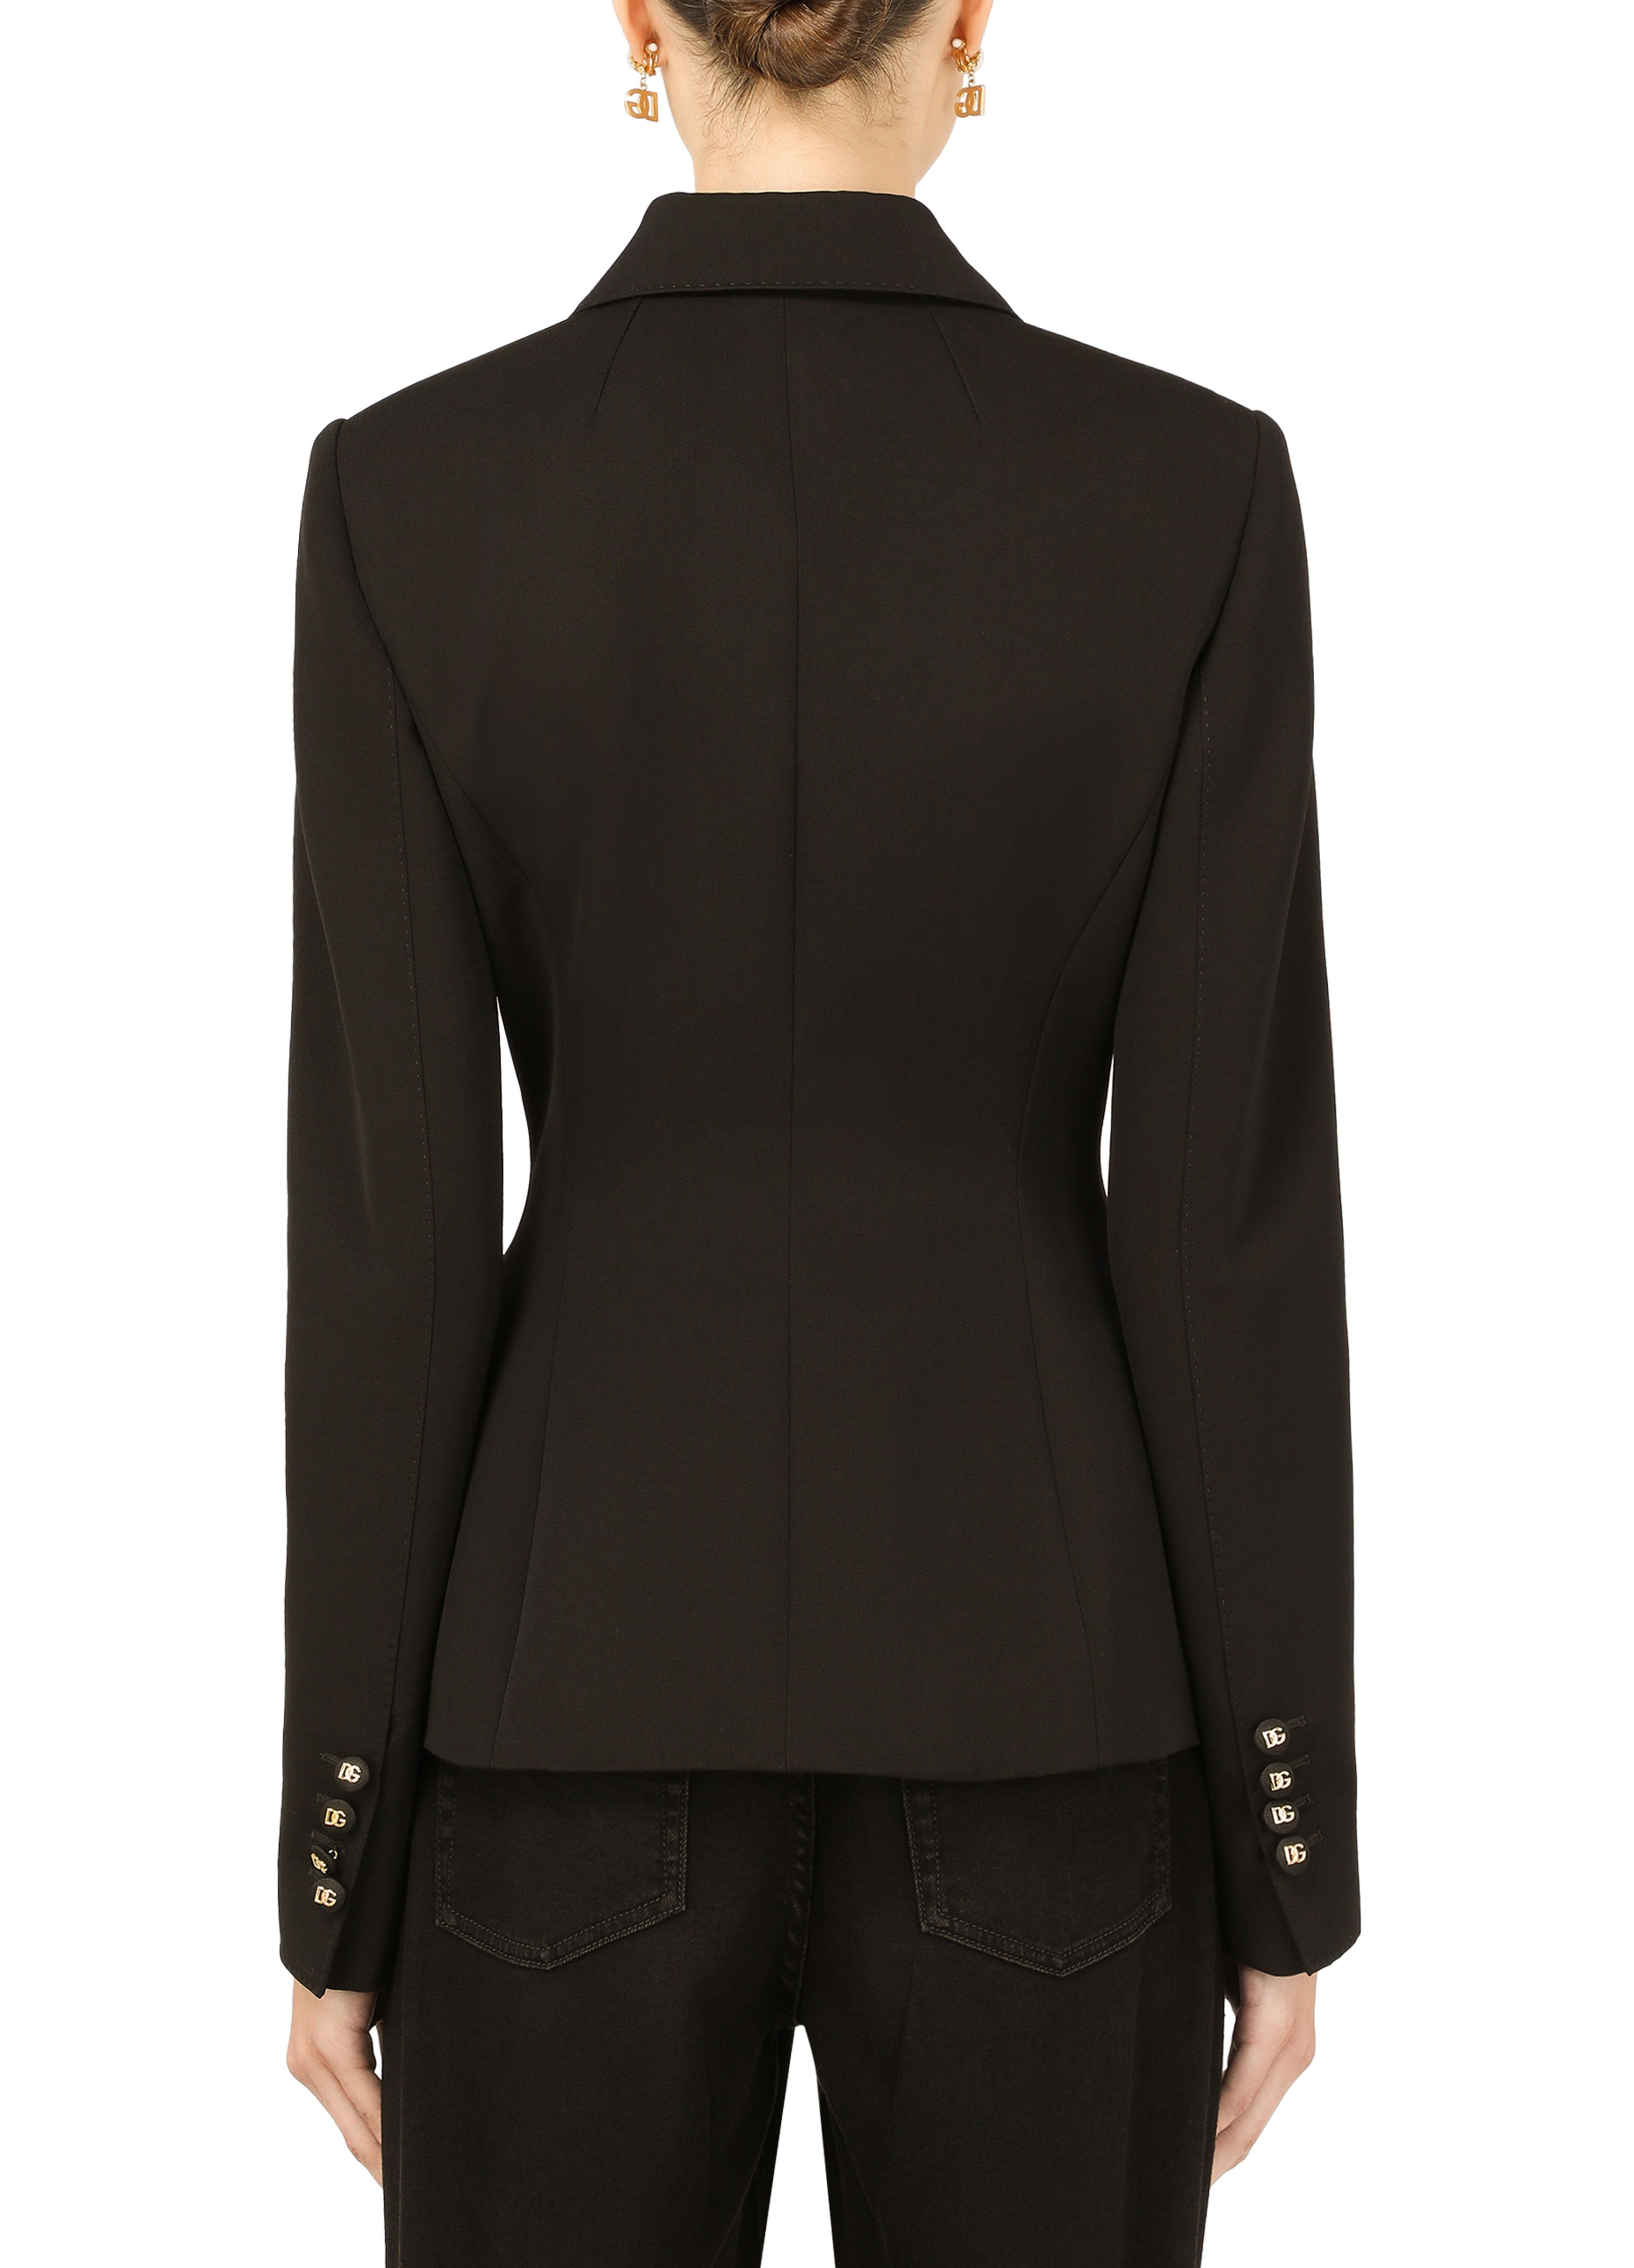 Dolce & Gabbana Dolce-fit woolen jacket